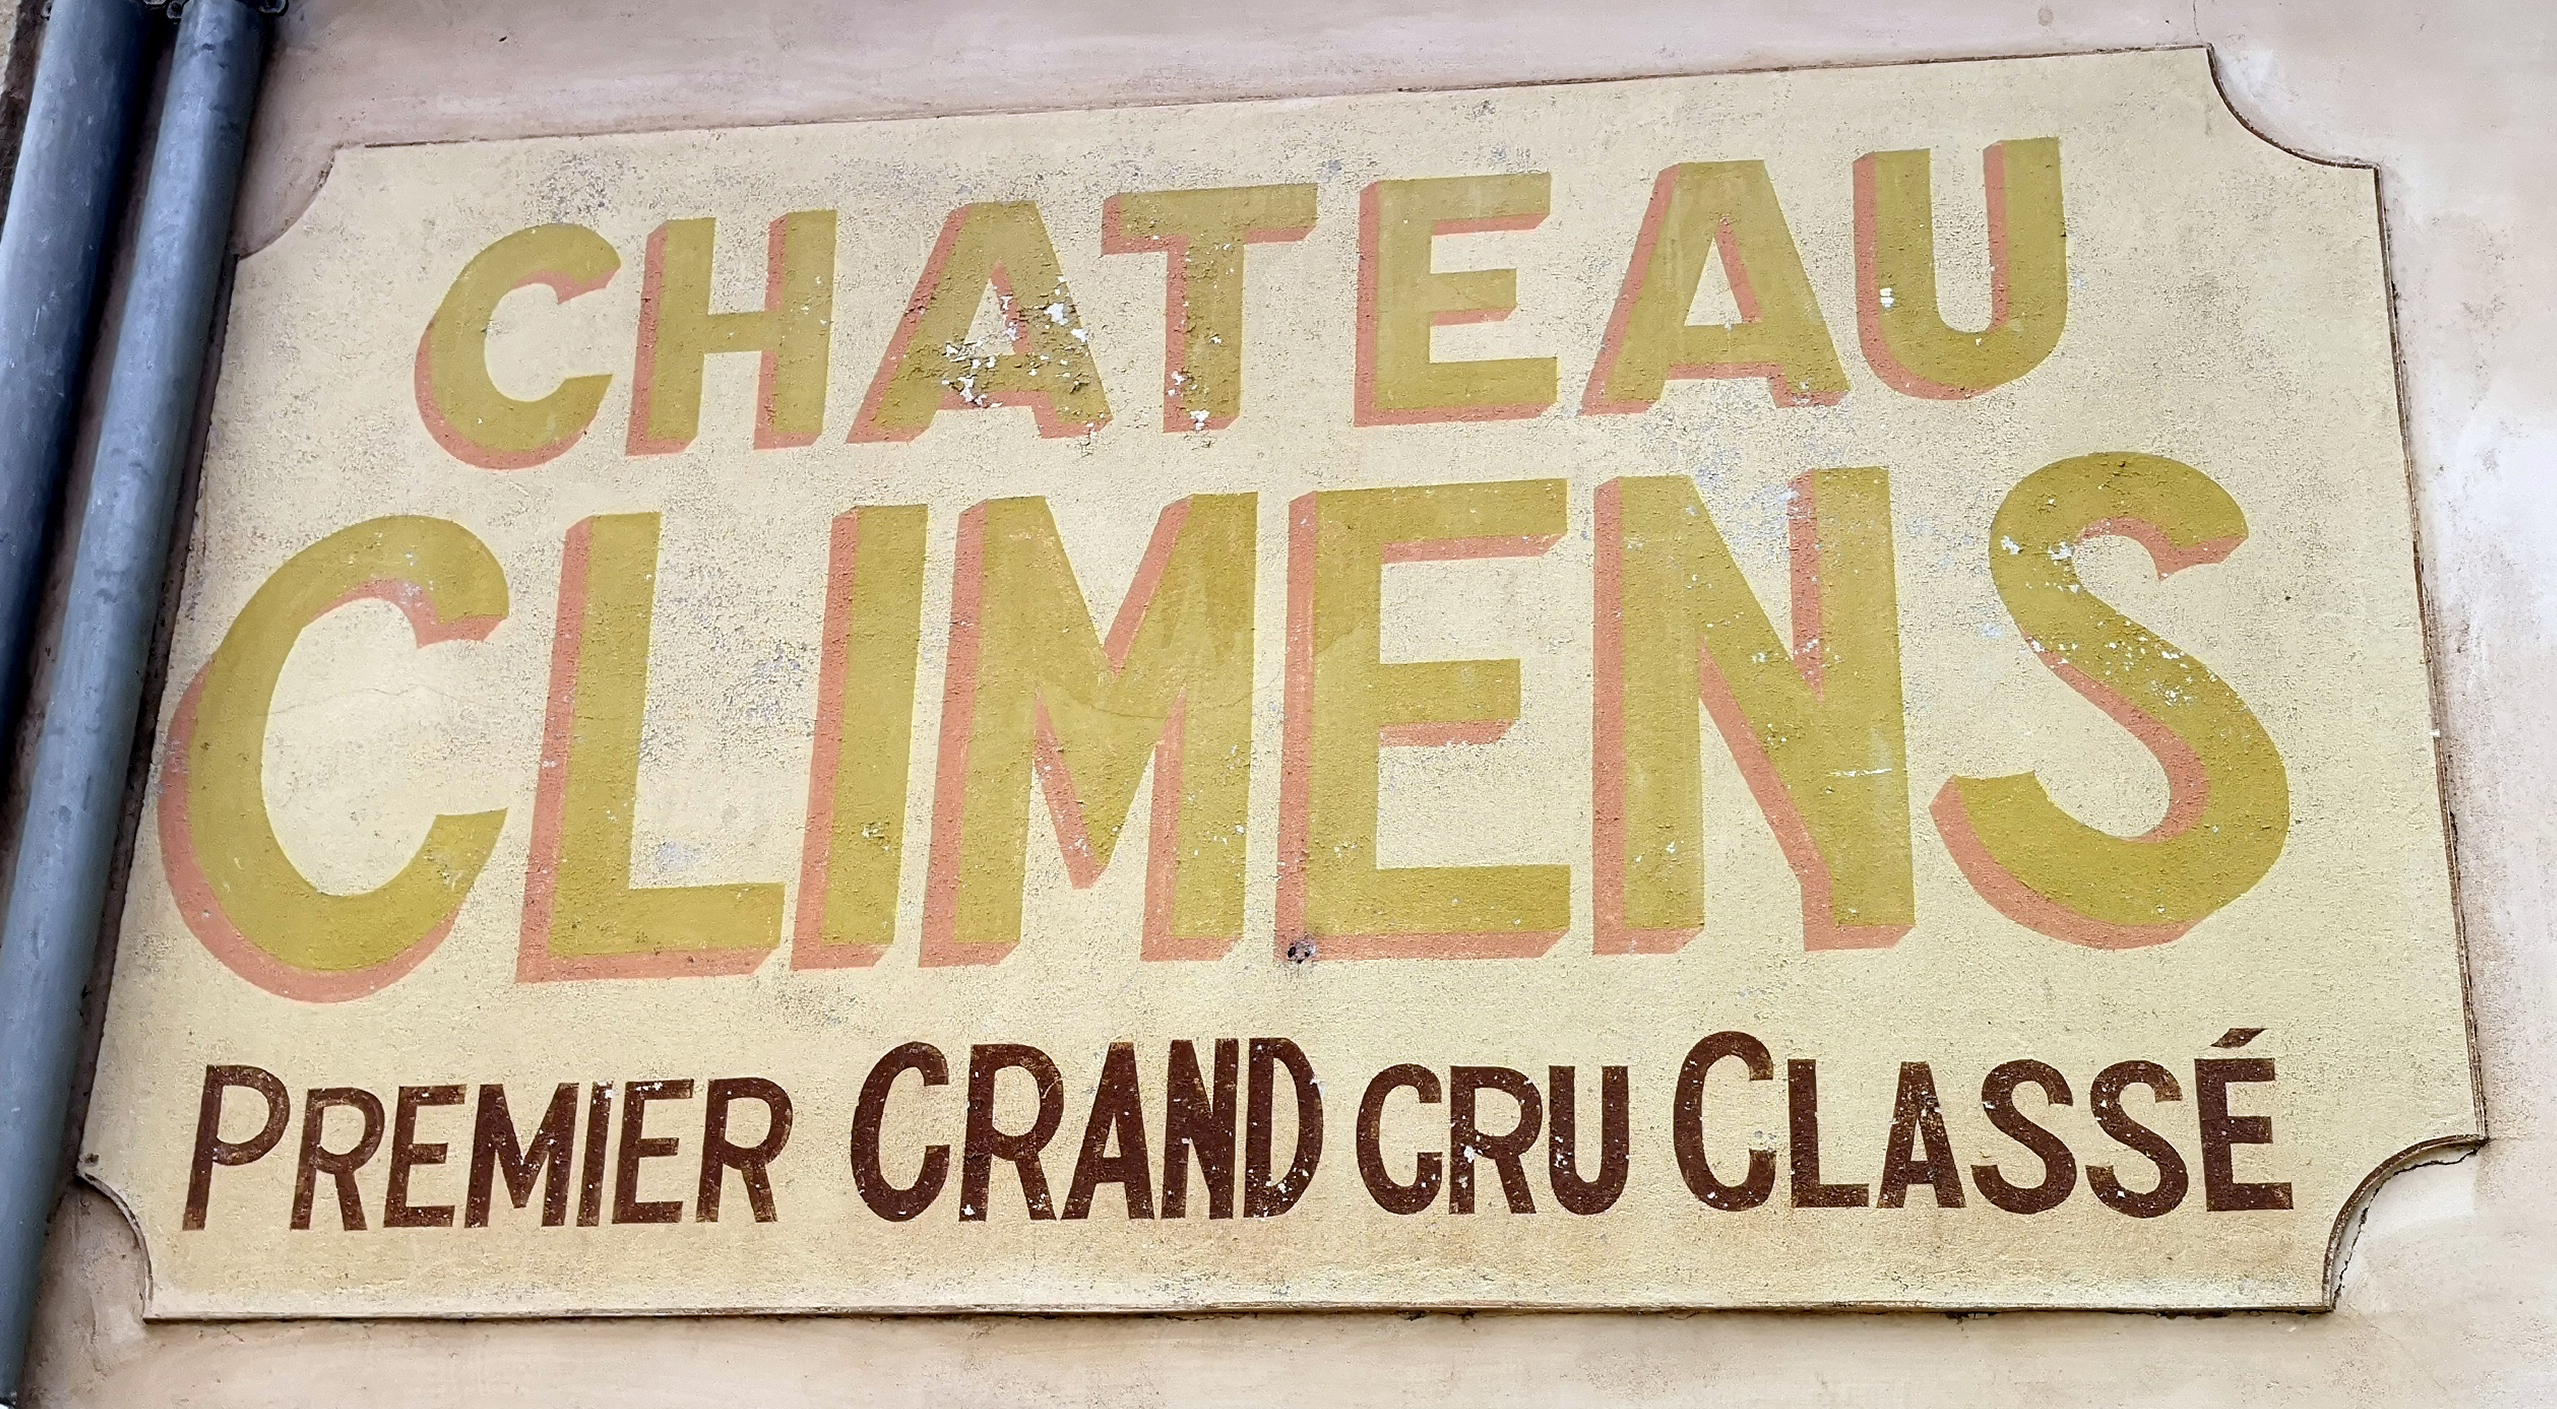 Château Climens